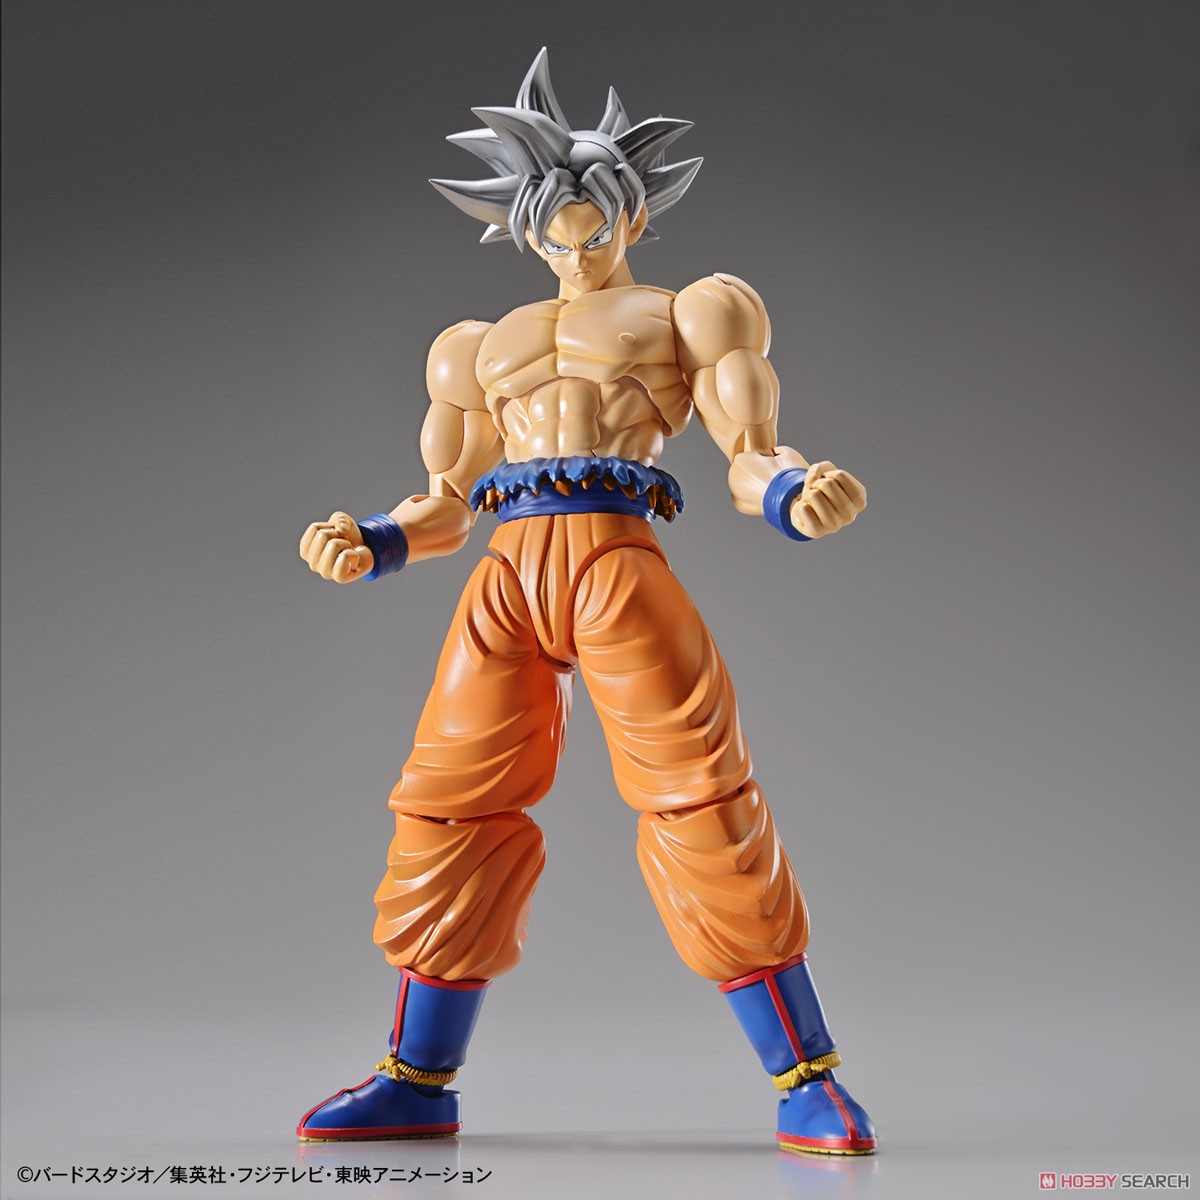 Figure-rise Standard - Son Goku (Ultra Instinct)